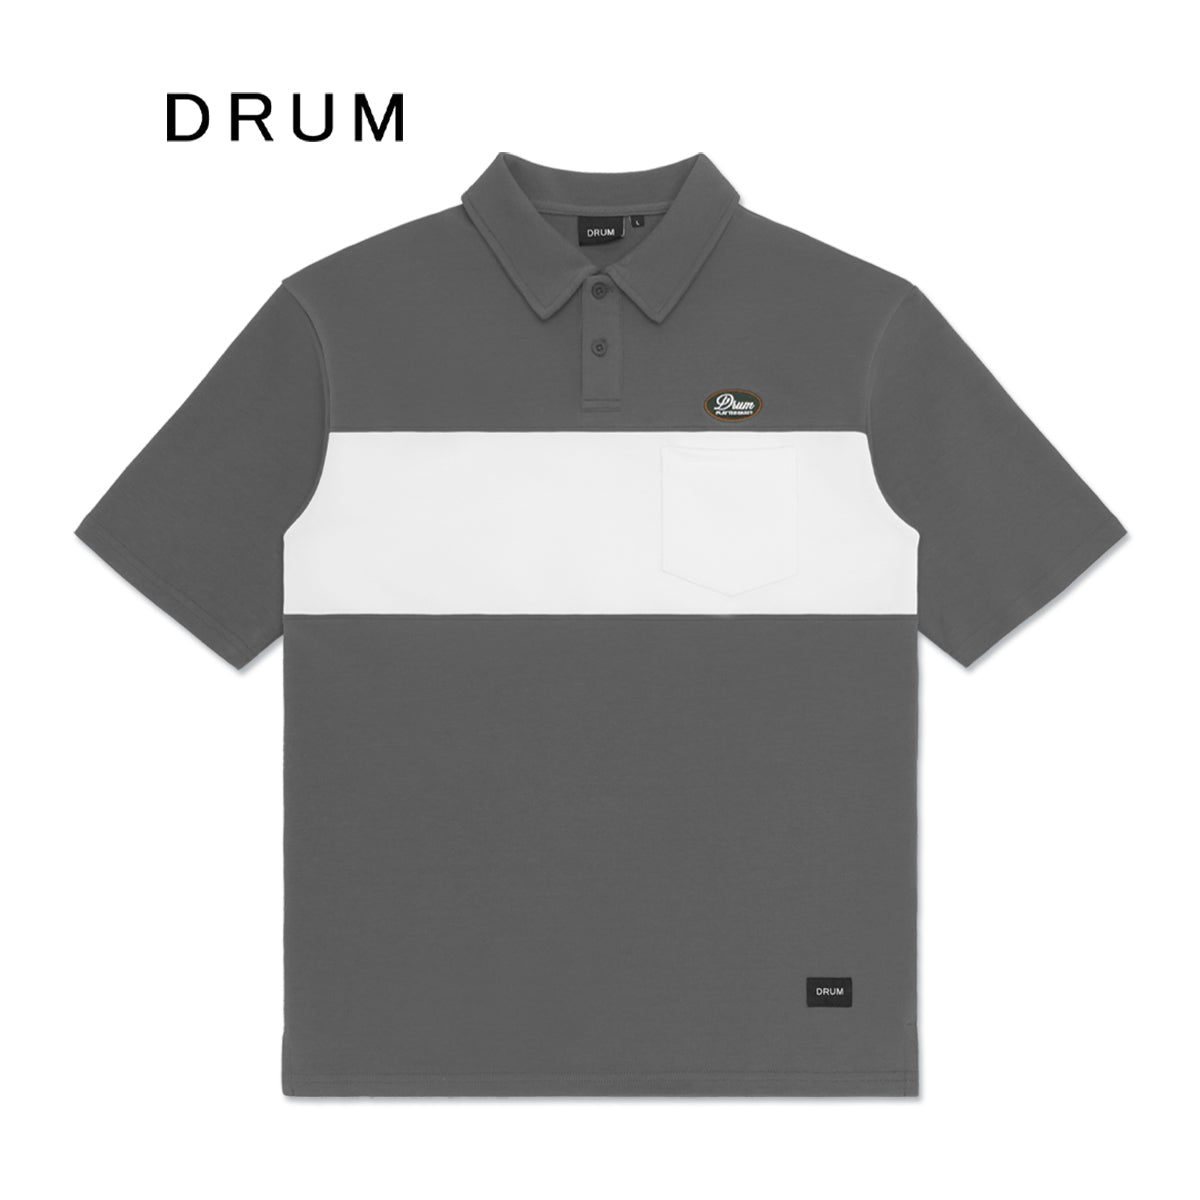 Man Half Shirt Size Chart – DRUM